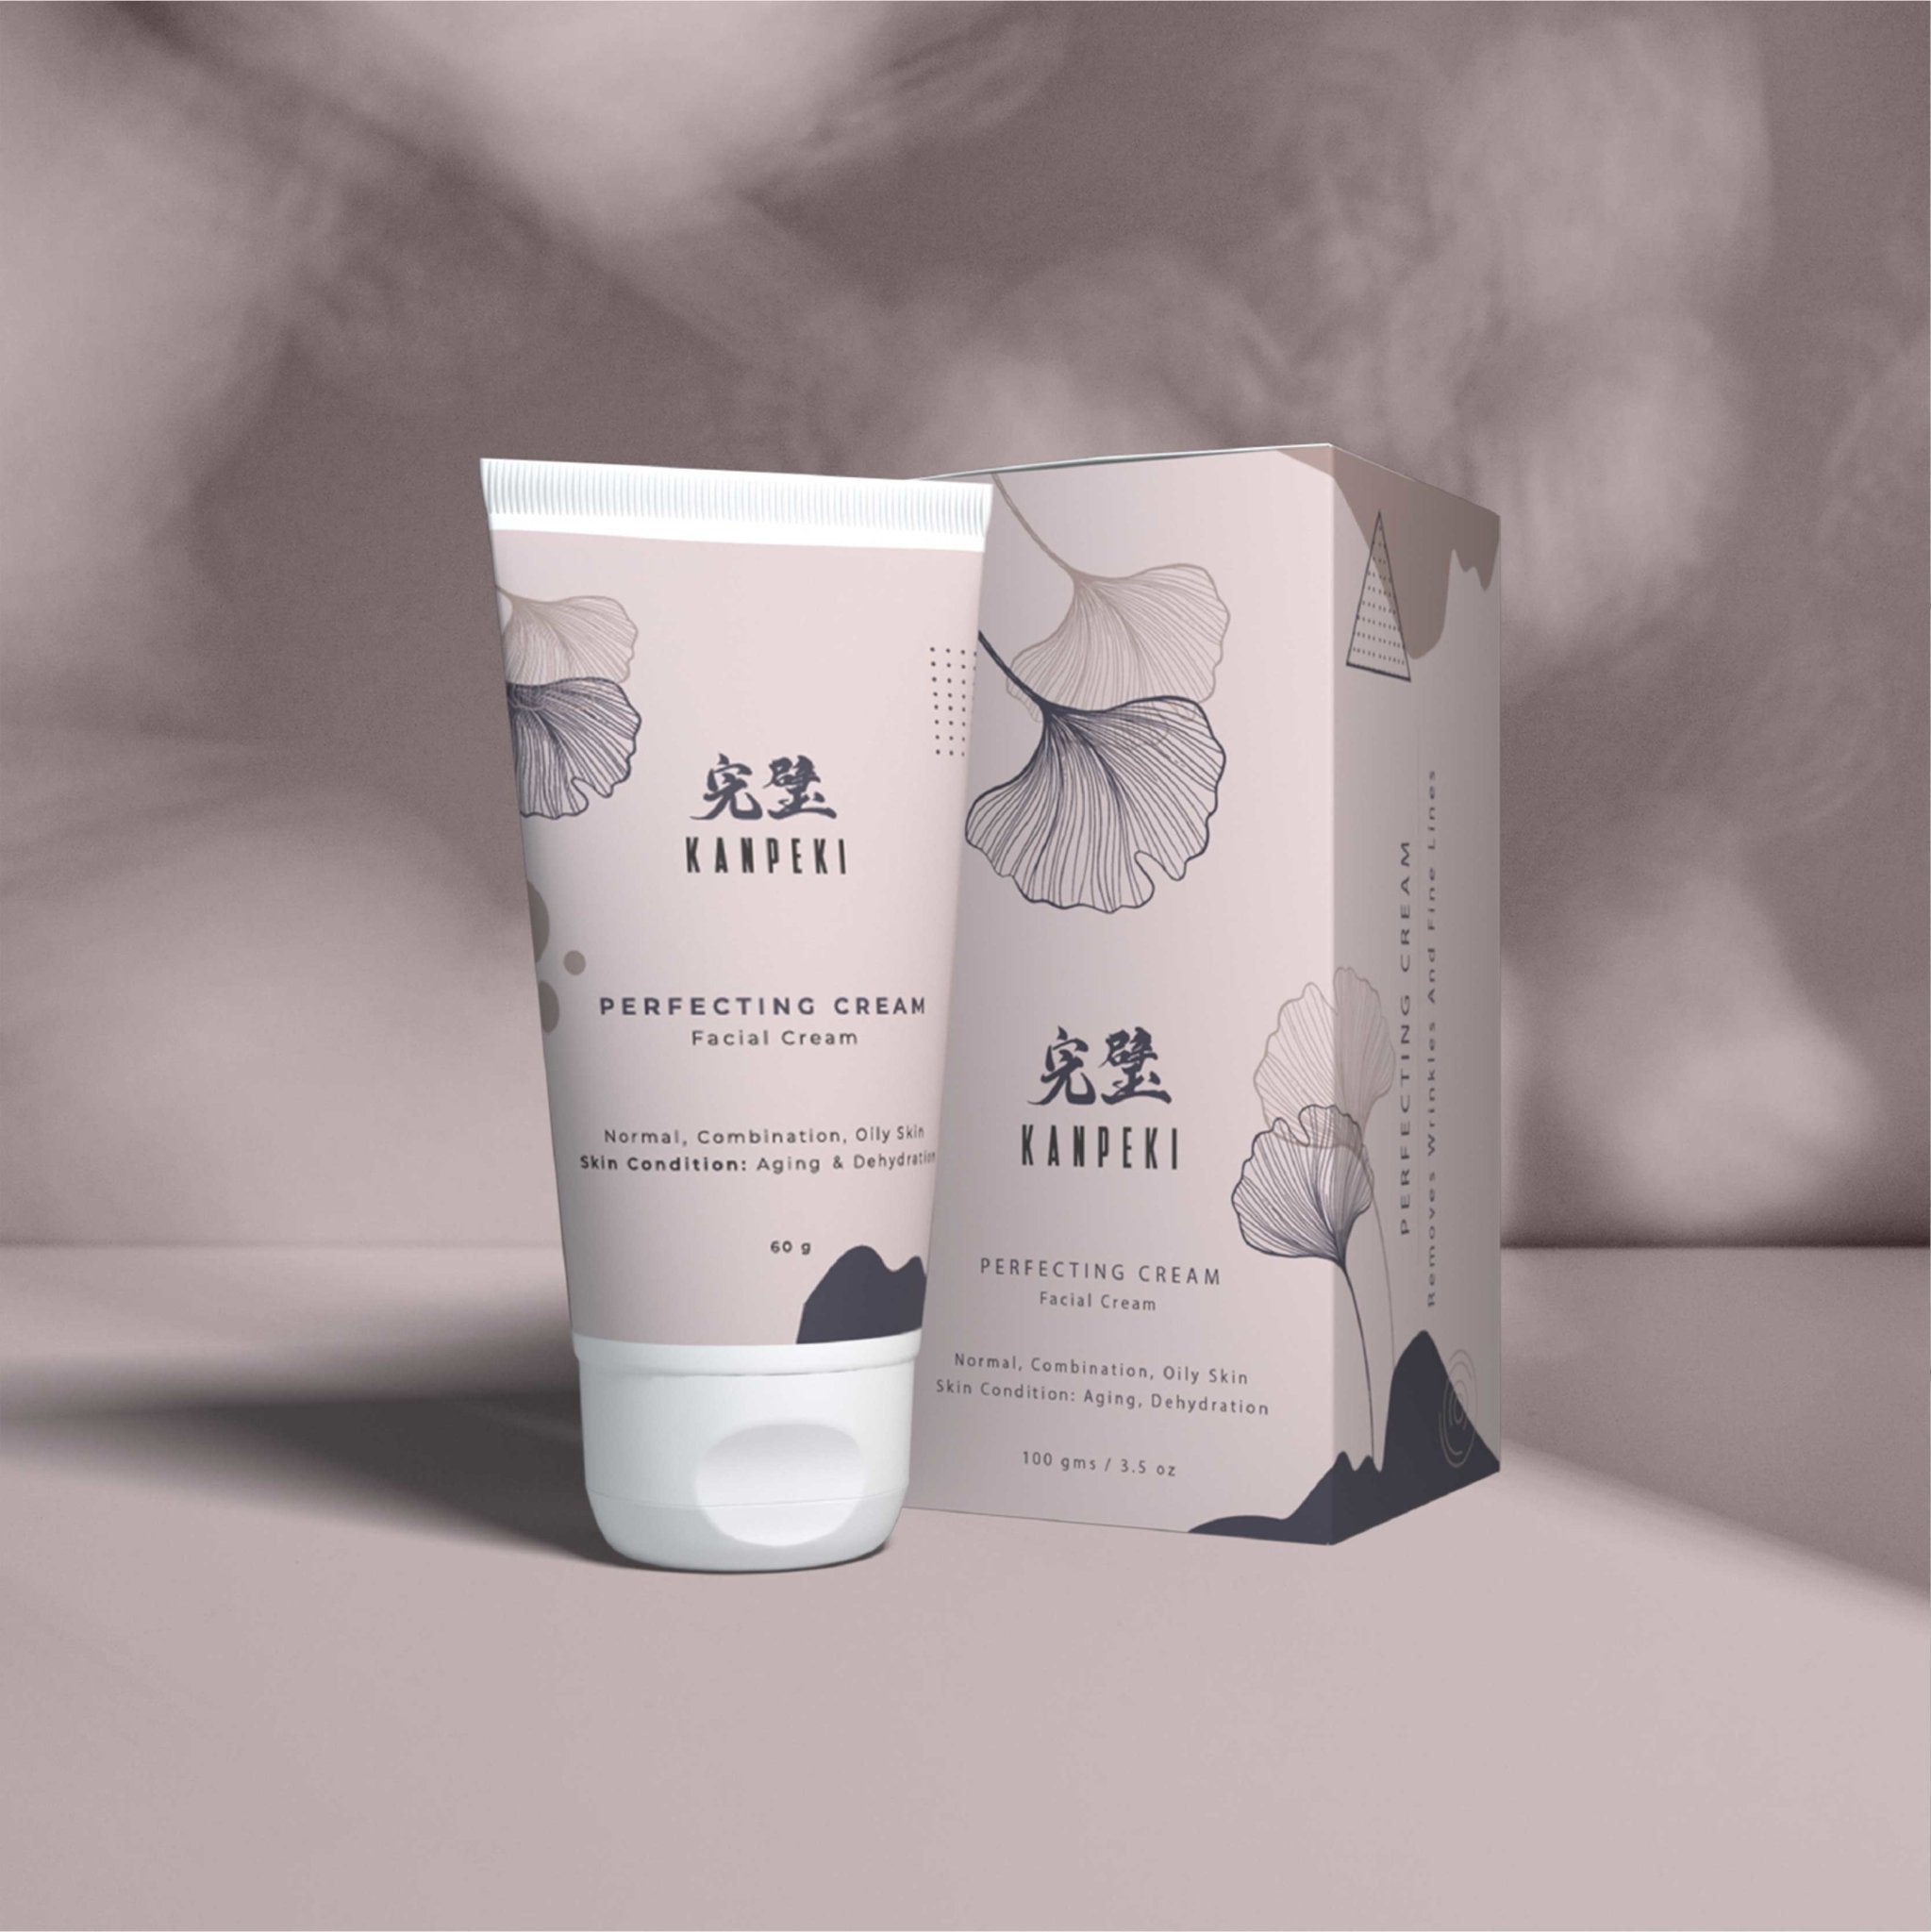 Perfecting Cream - Kanpeki Skincare products women